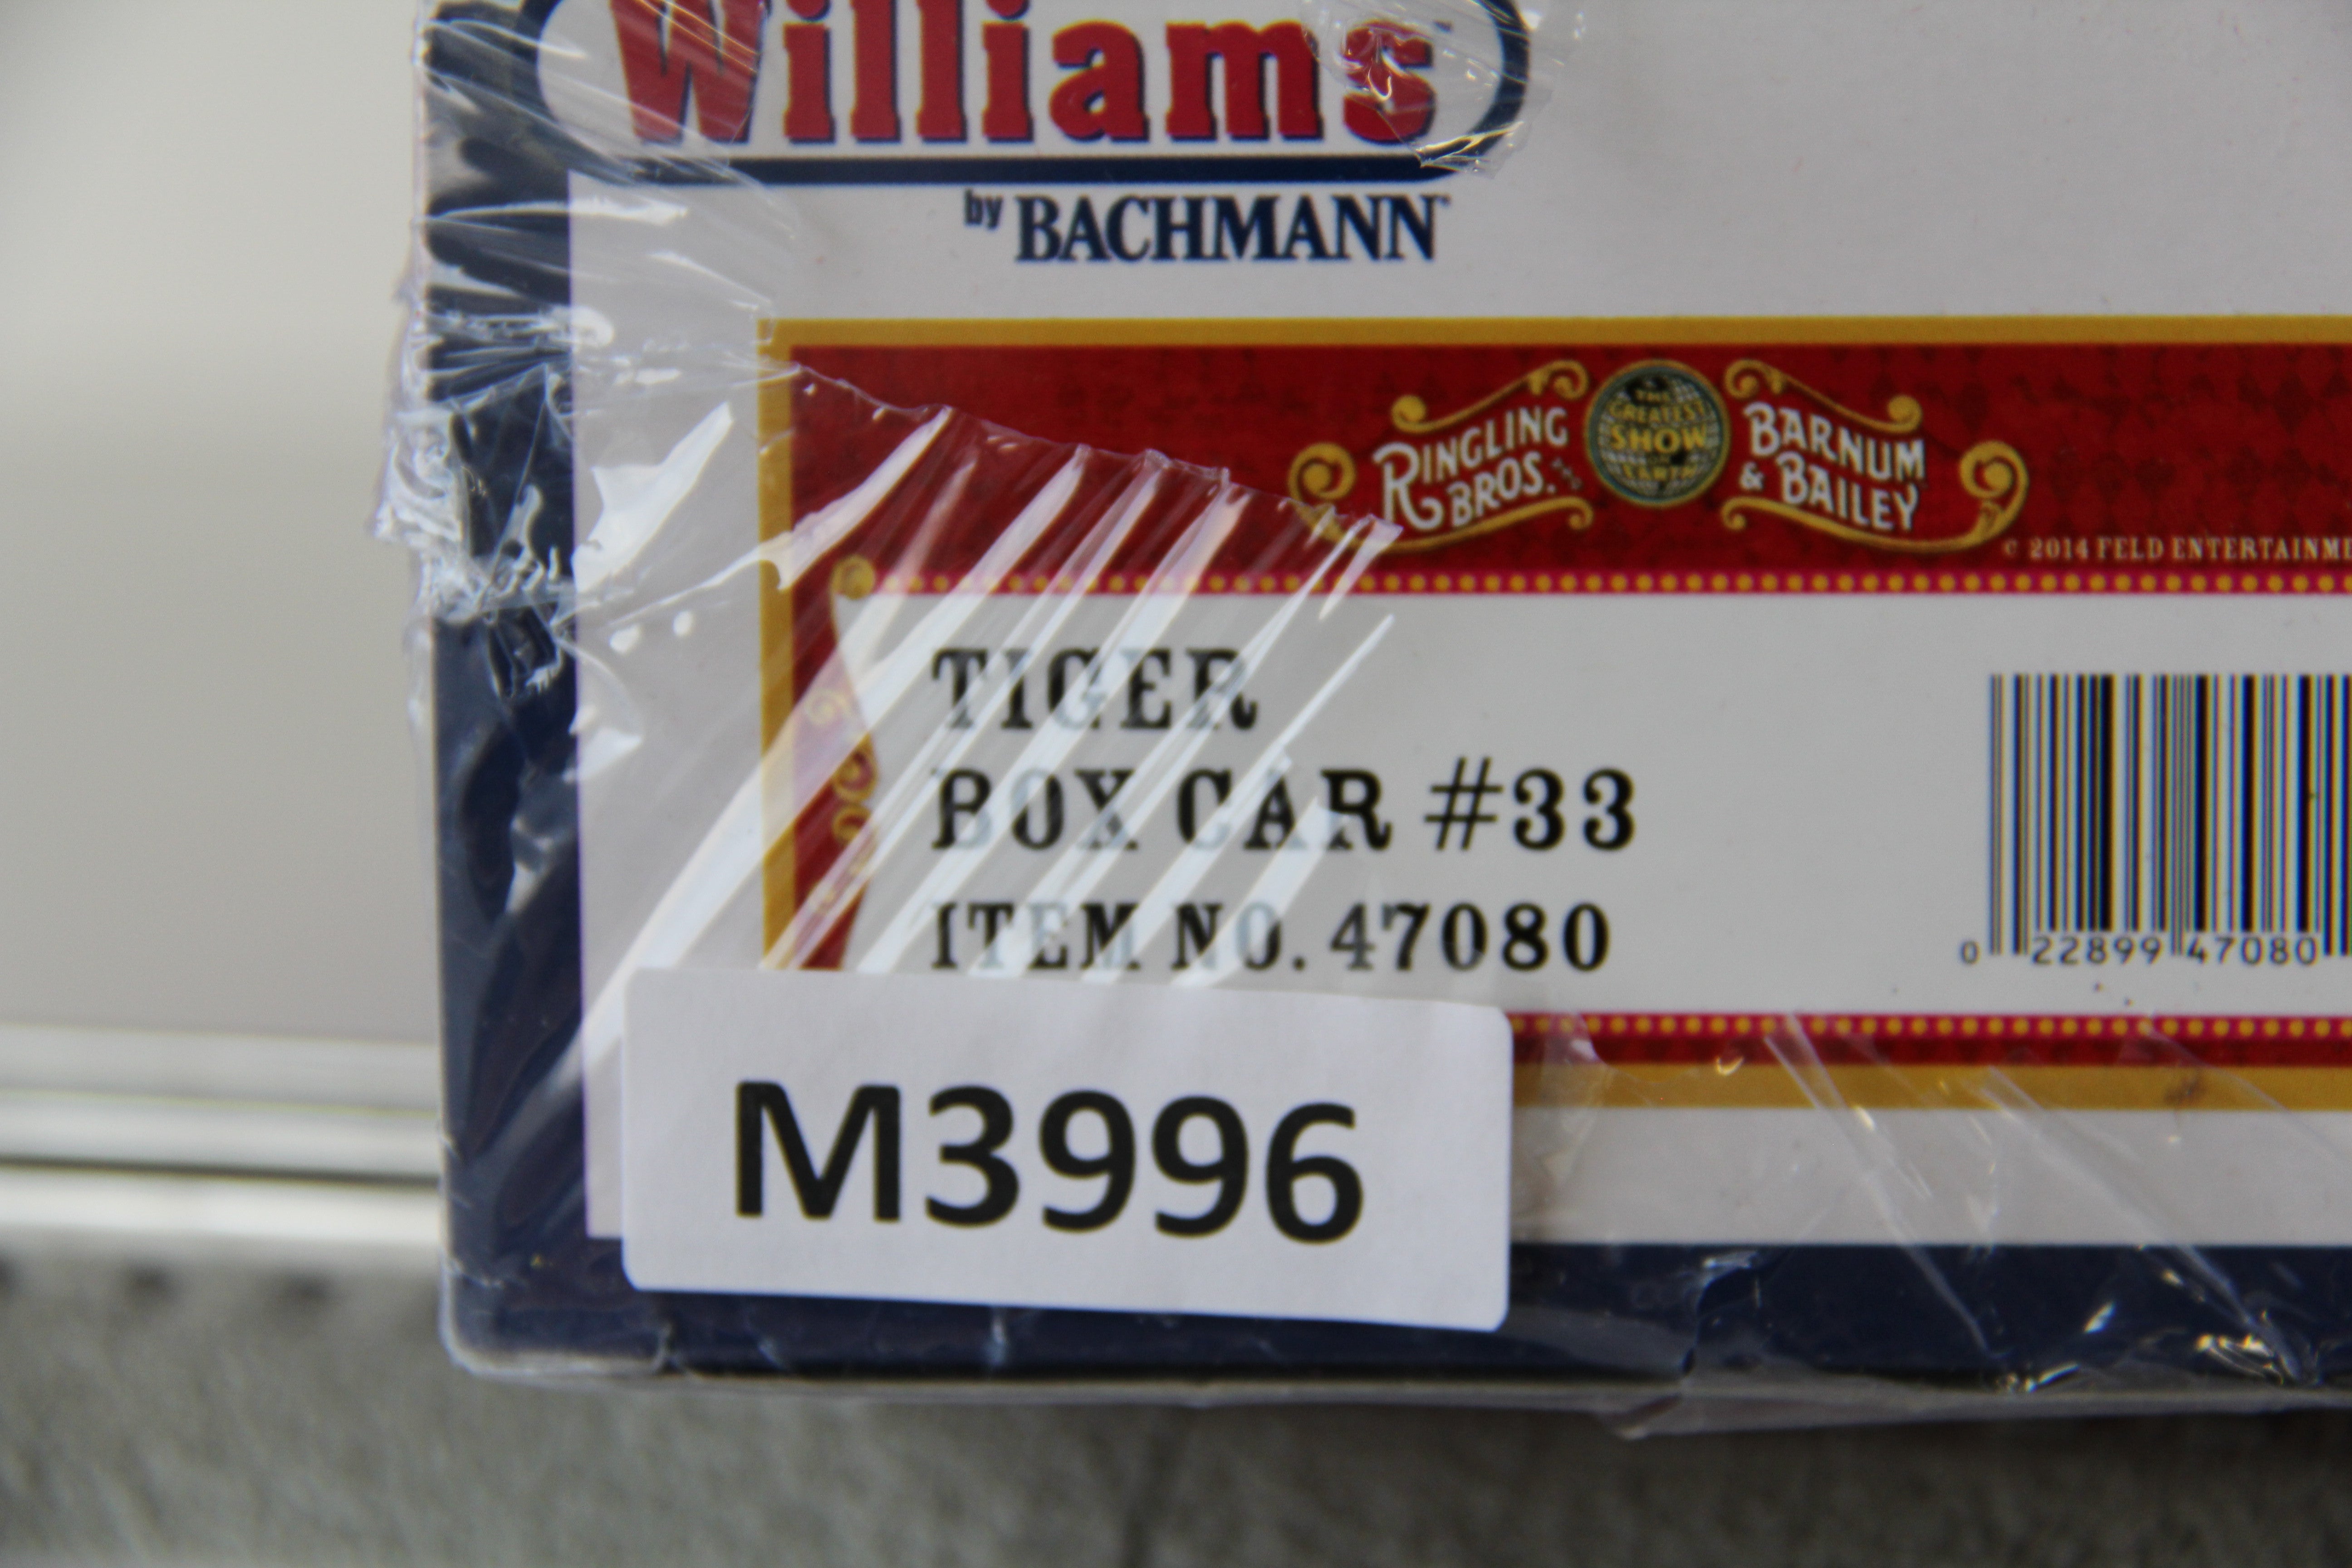 Williams #47080 Tiger Box Car #33-Second hand-M3996